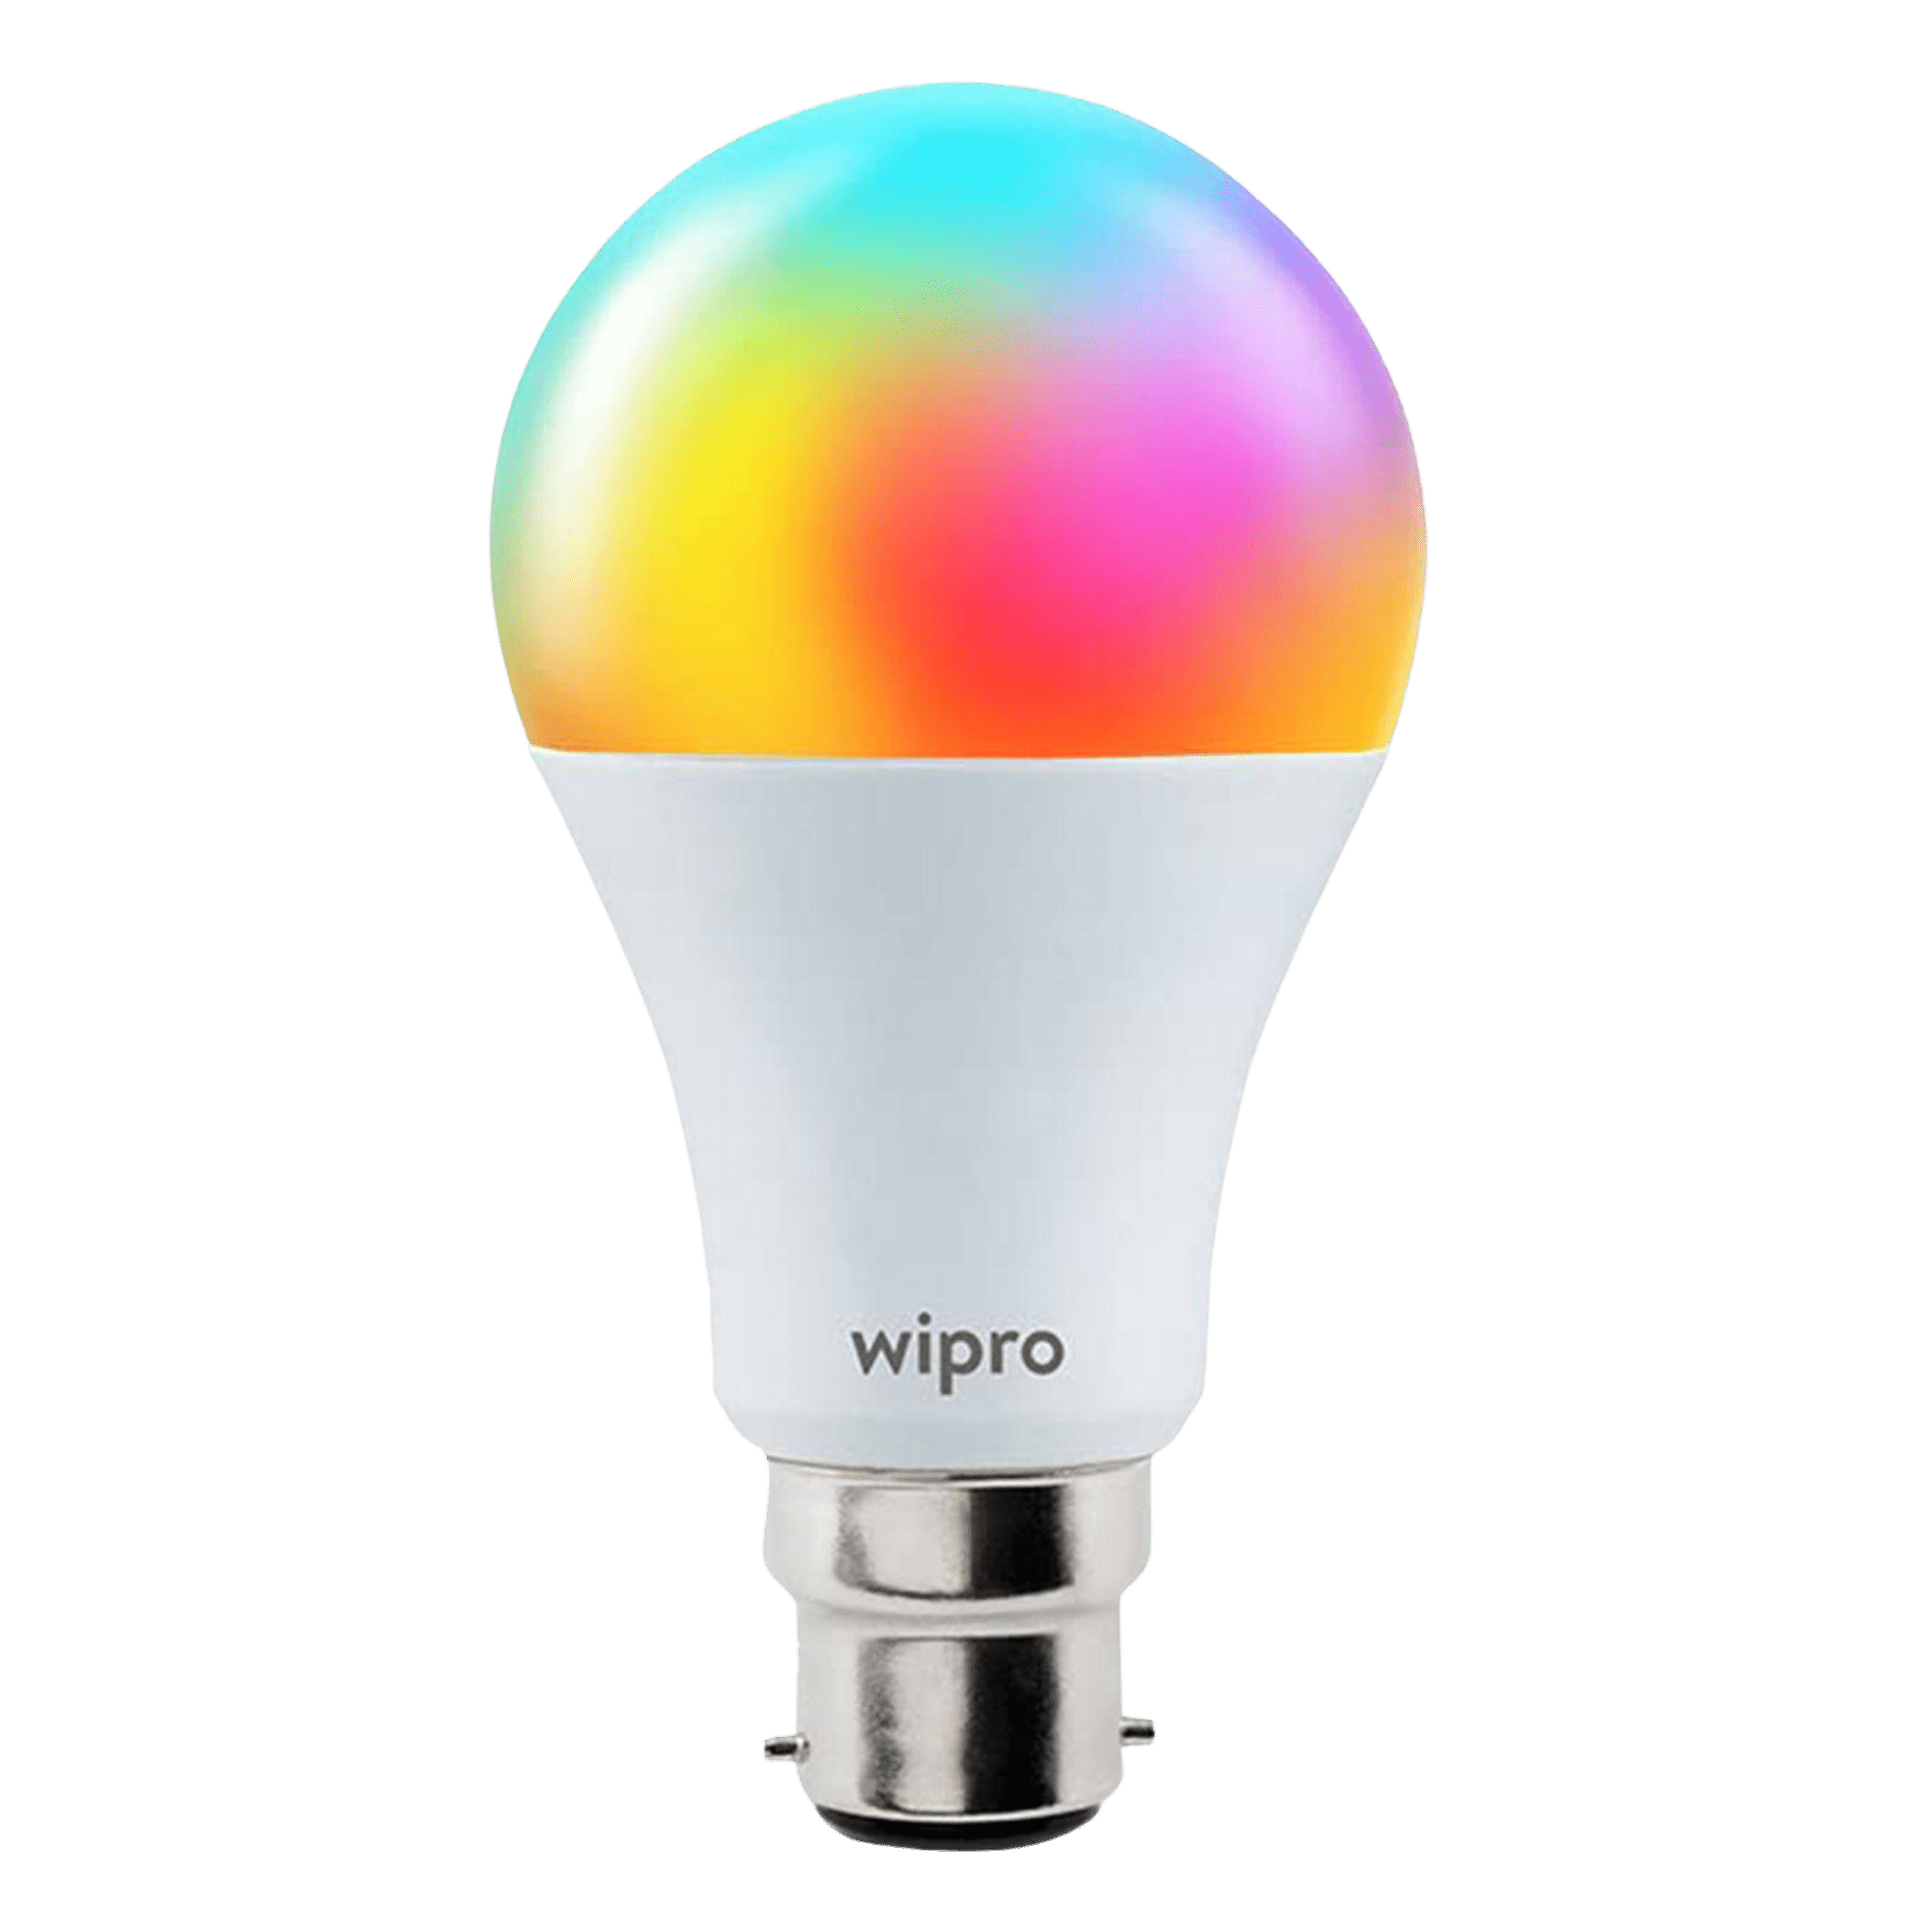 Time2 Ella WiFi LED Smart Light Bulb – b22 (Pack of 2)